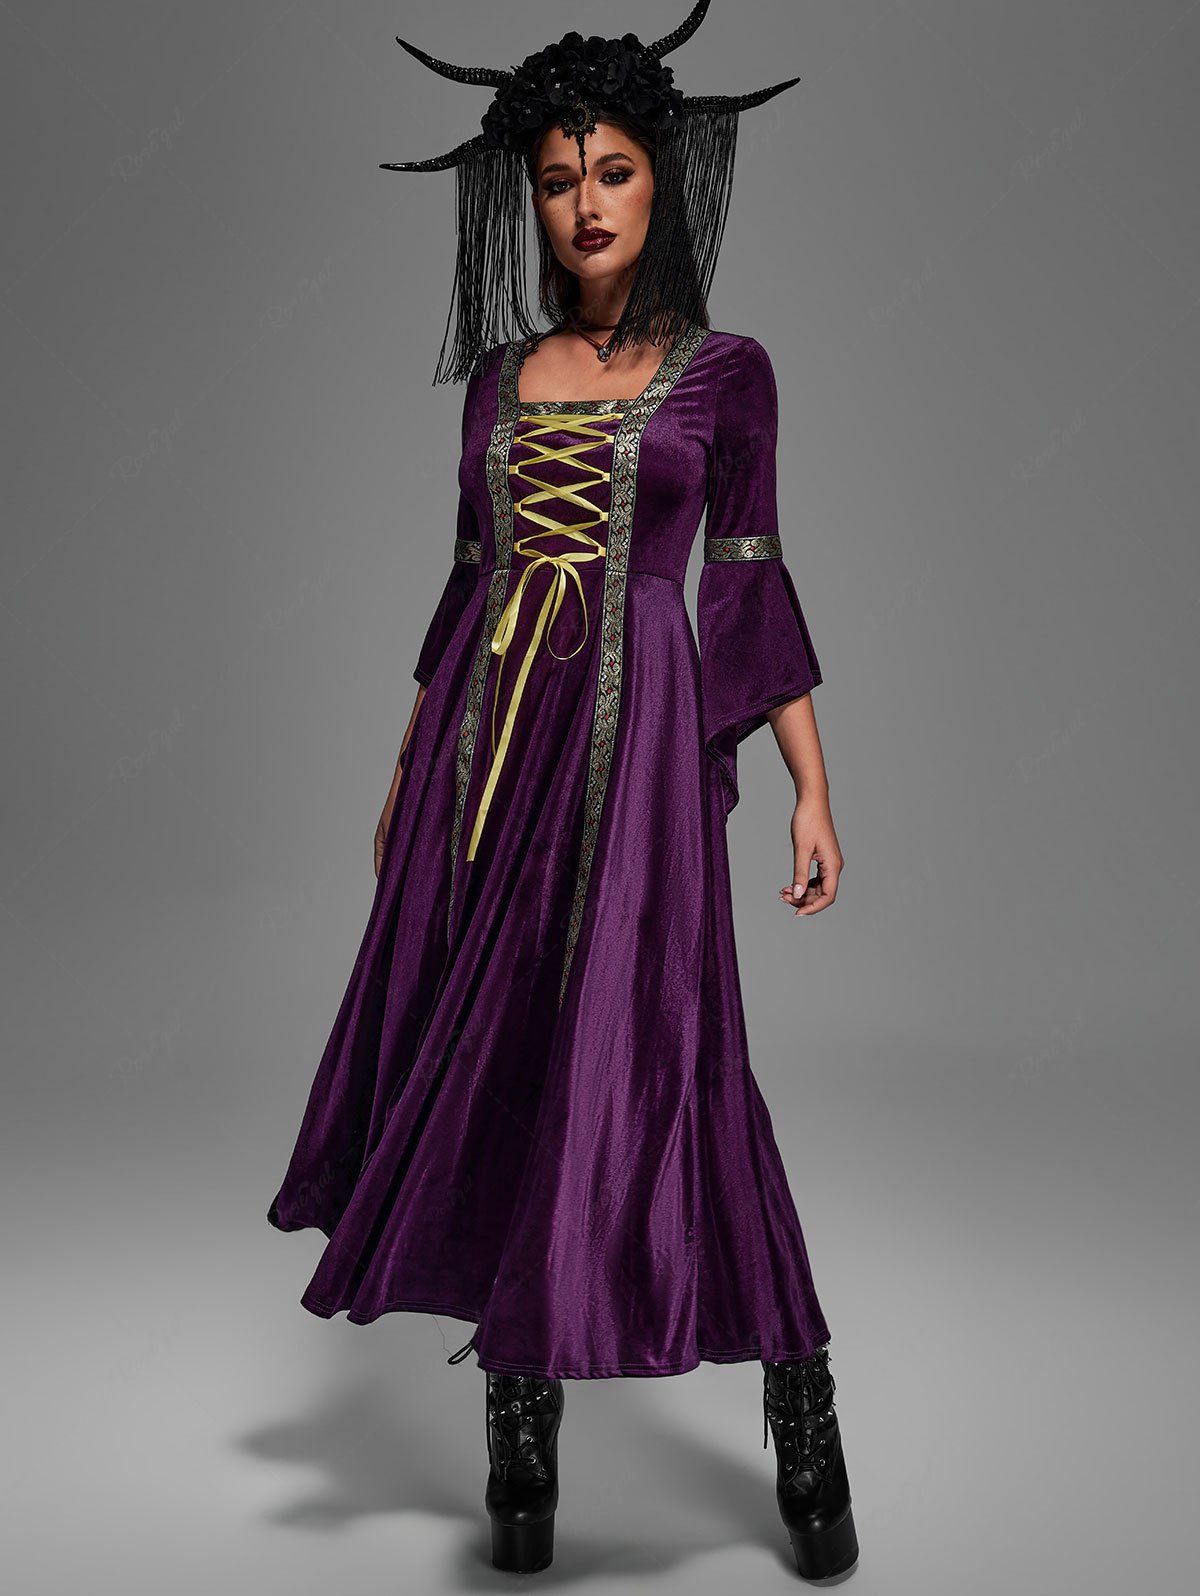 💗Vixtina Loves💗 Plus Size Gothic Lace Up Vintage Bell Sleeves Velvet Maxi Renaissance Medieval Dress